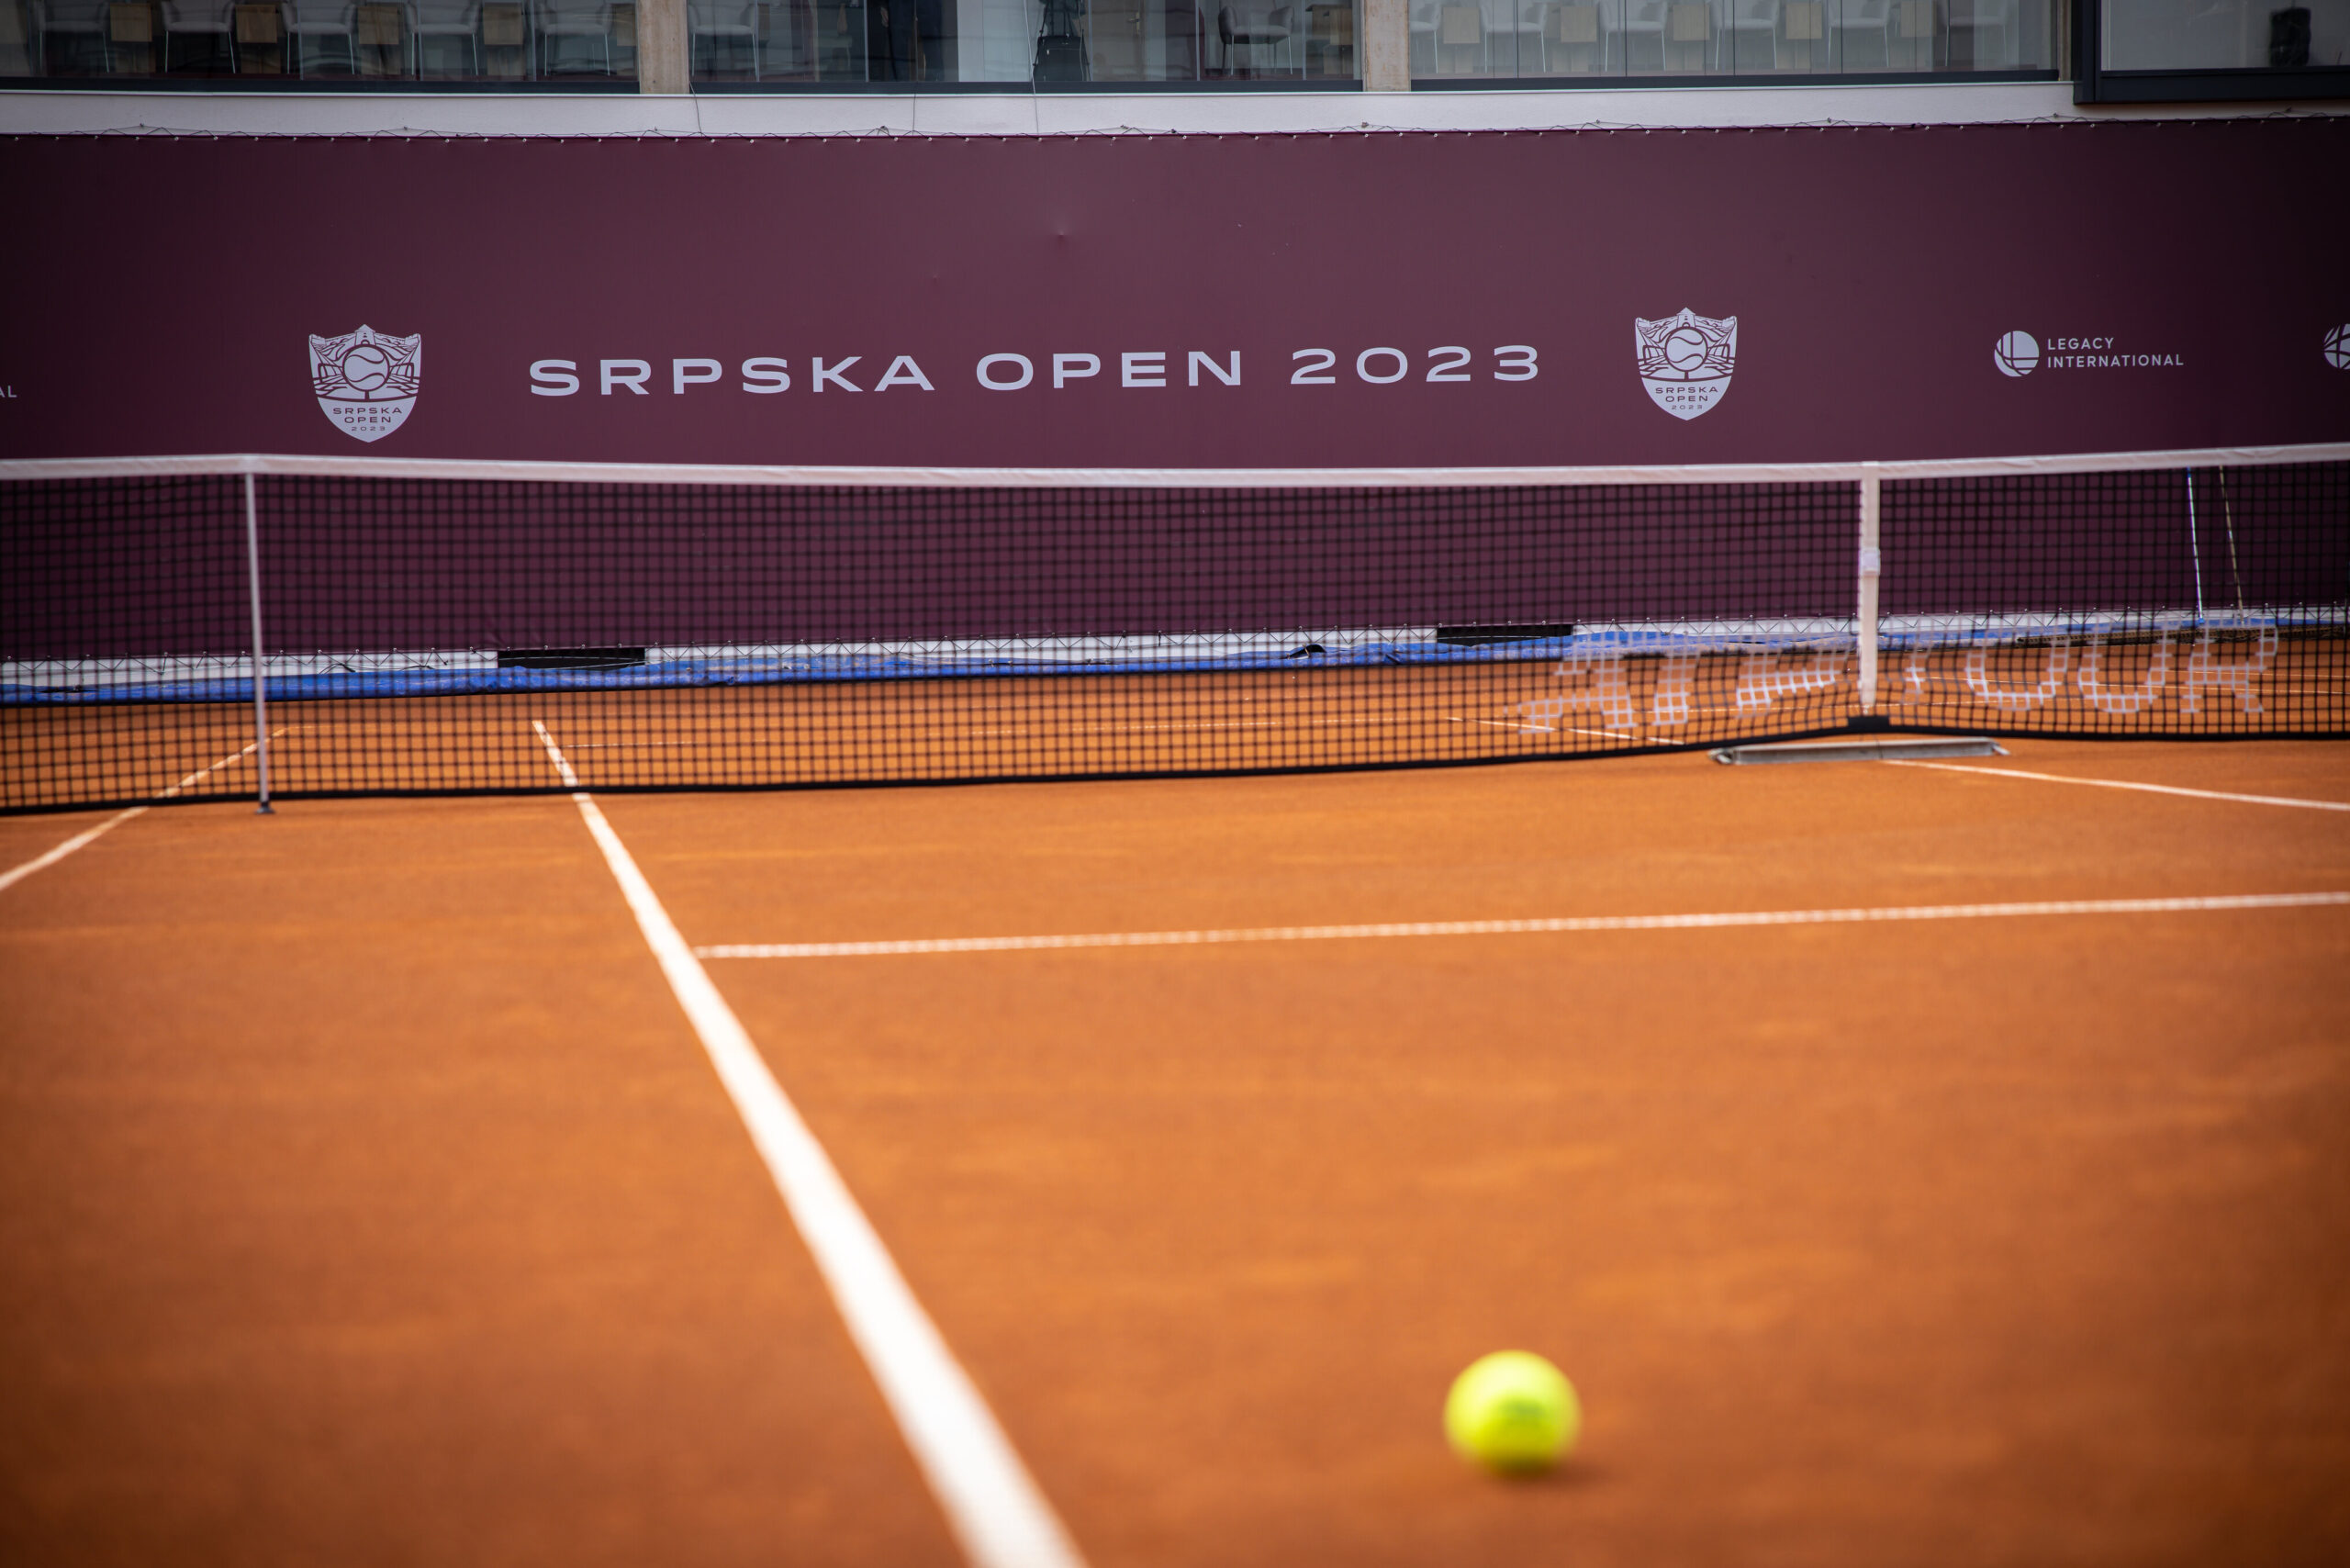 Srpska Open qualifying draw Srpska Open